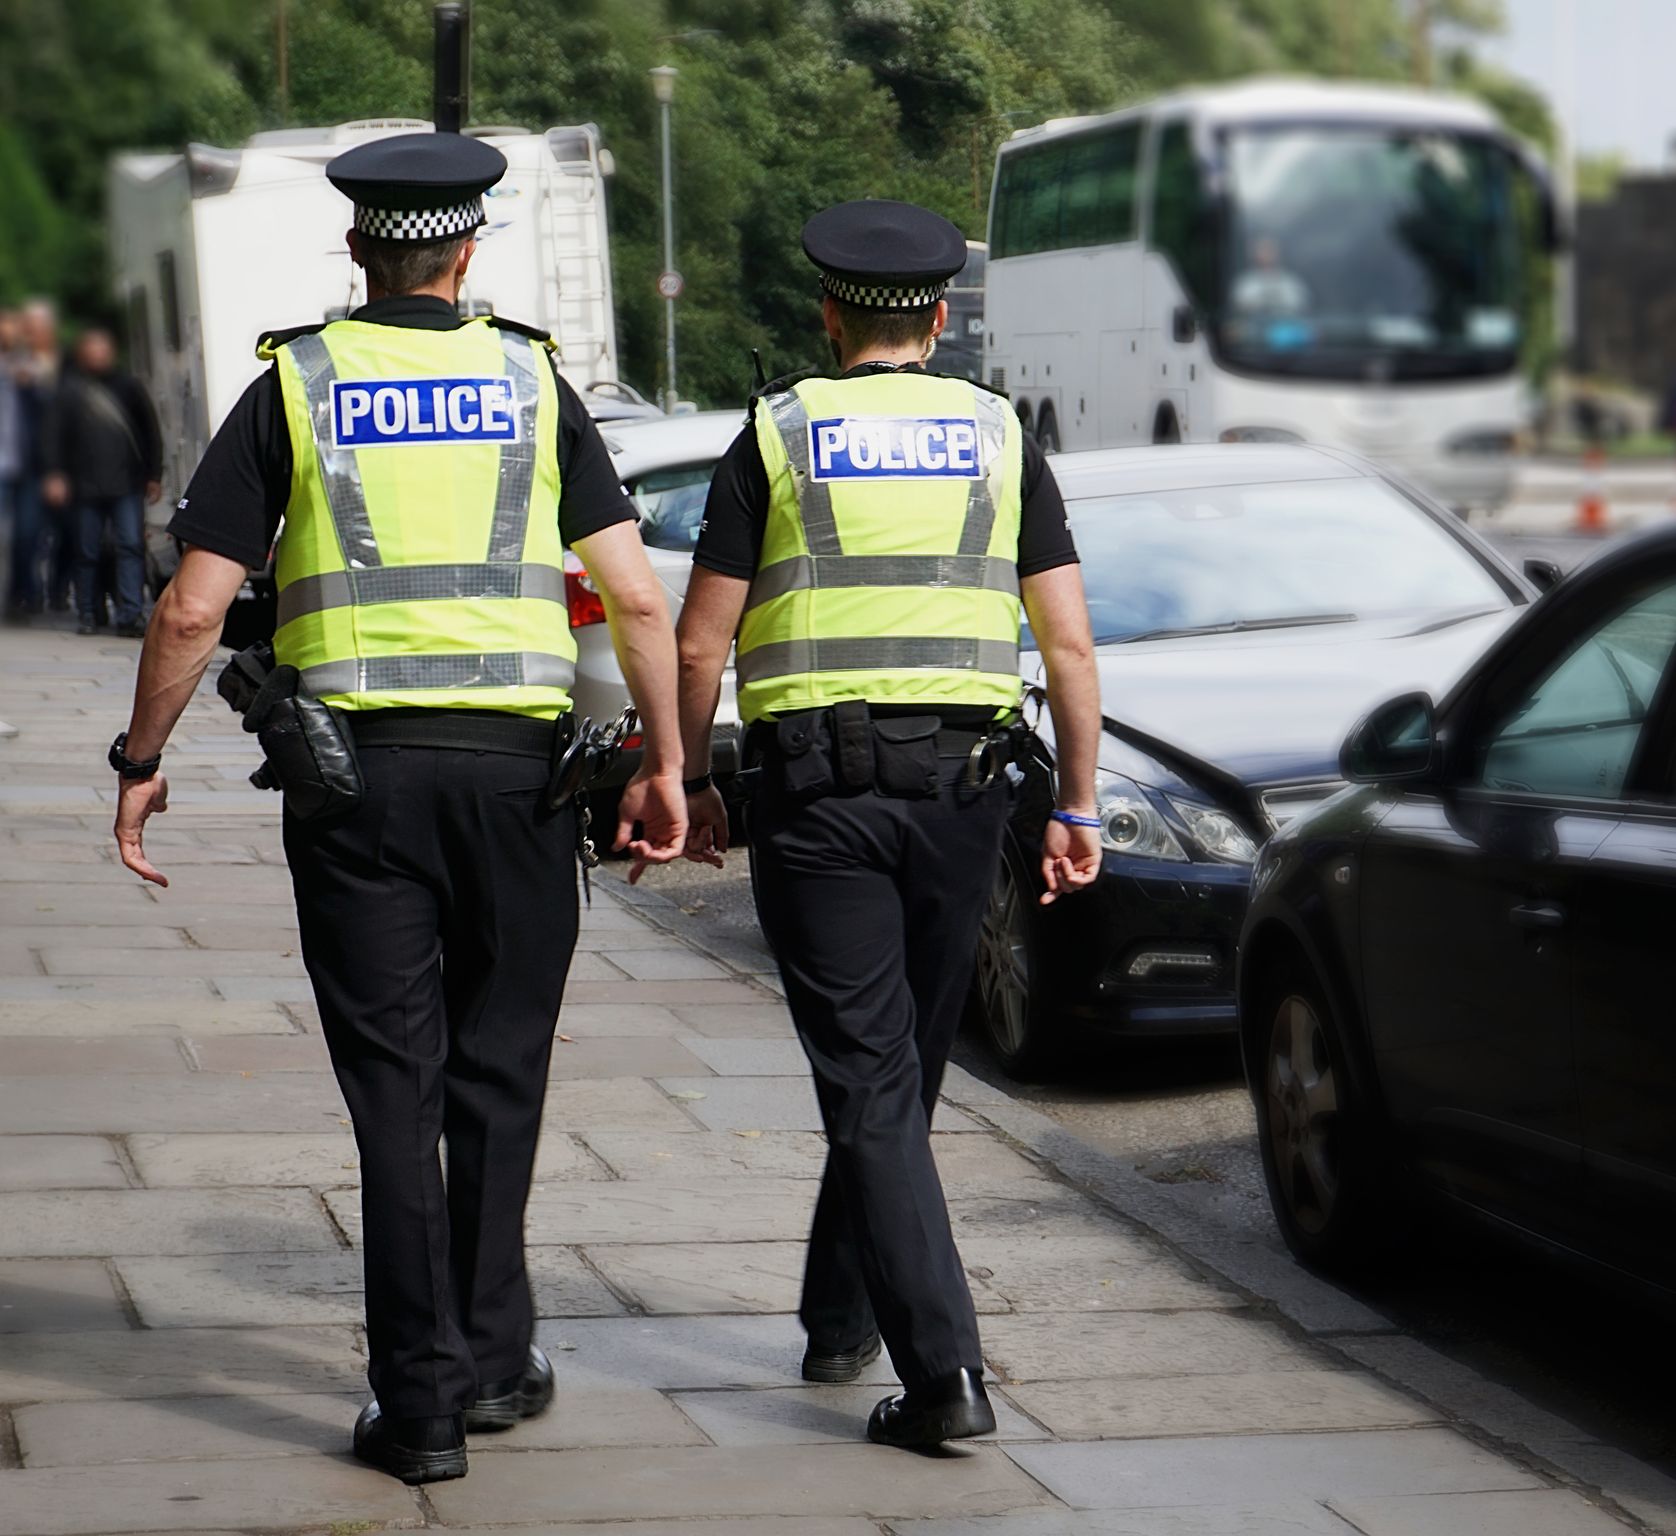 Police officers walking on the side walk. | Source: Shutterstock 